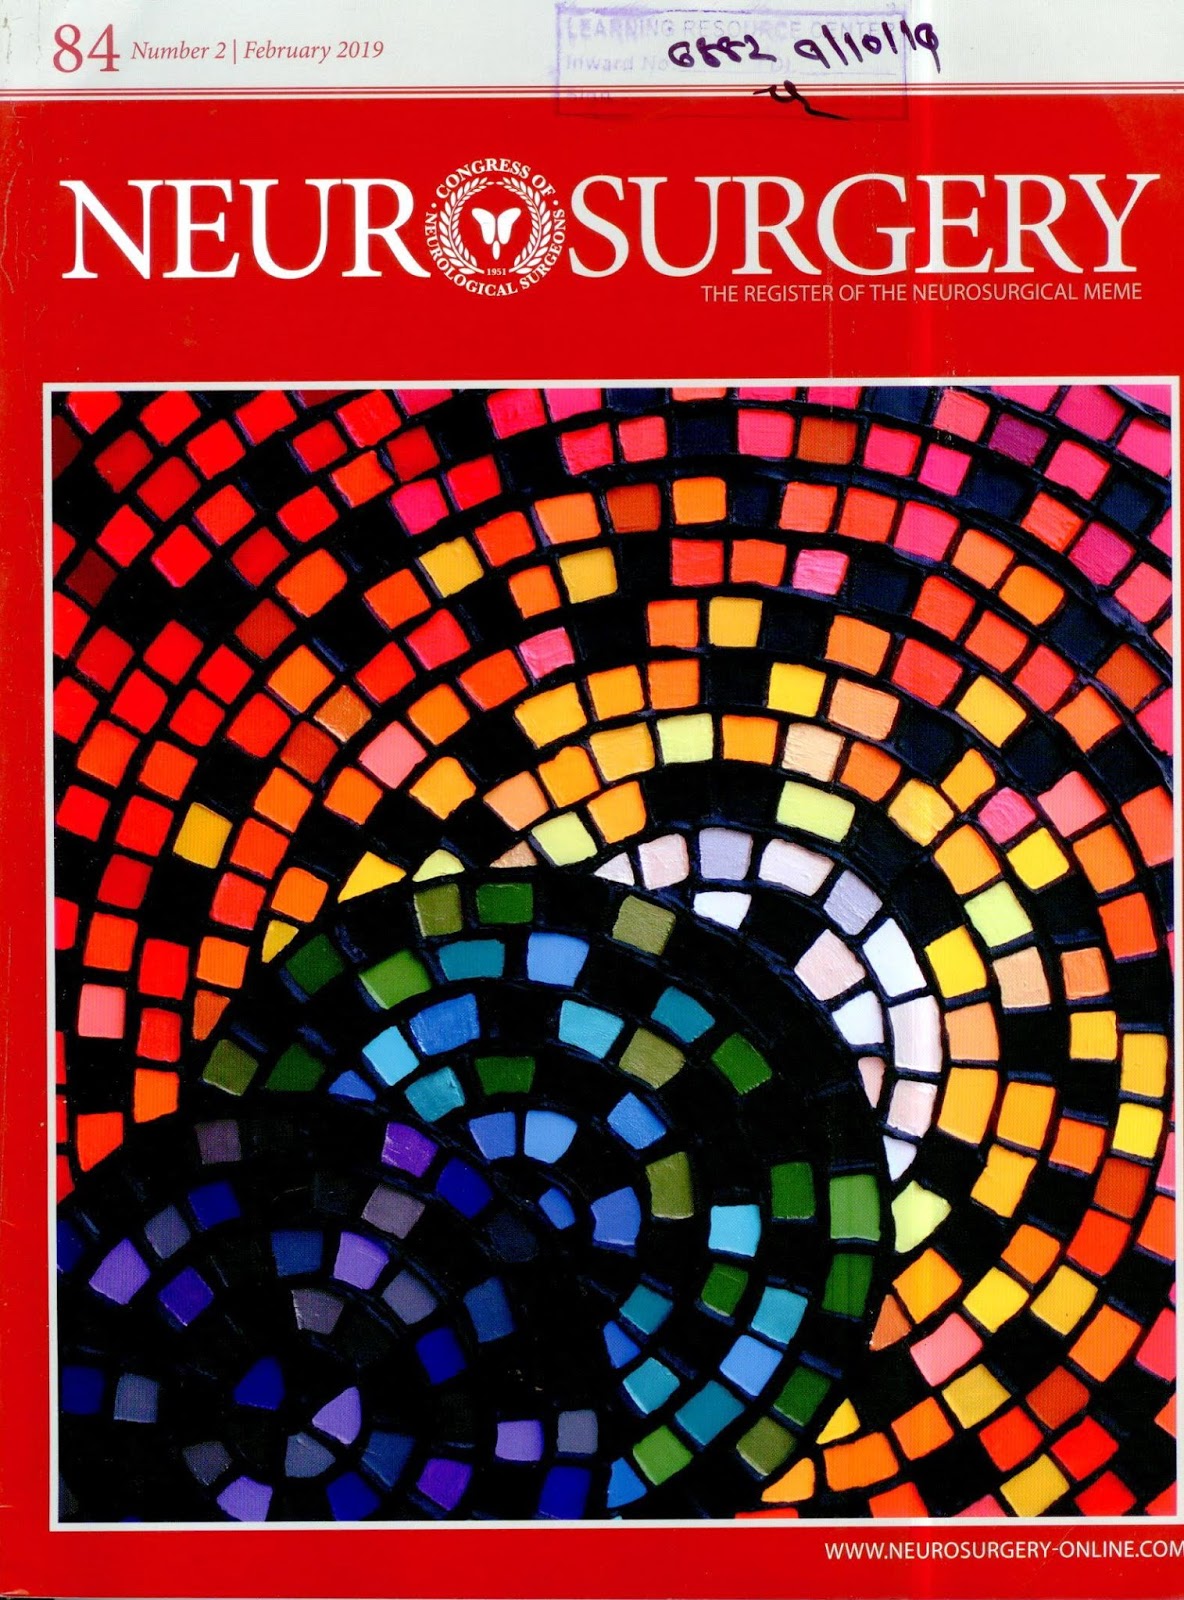 https://academic.oup.com/neurosurgery/issue/84/2